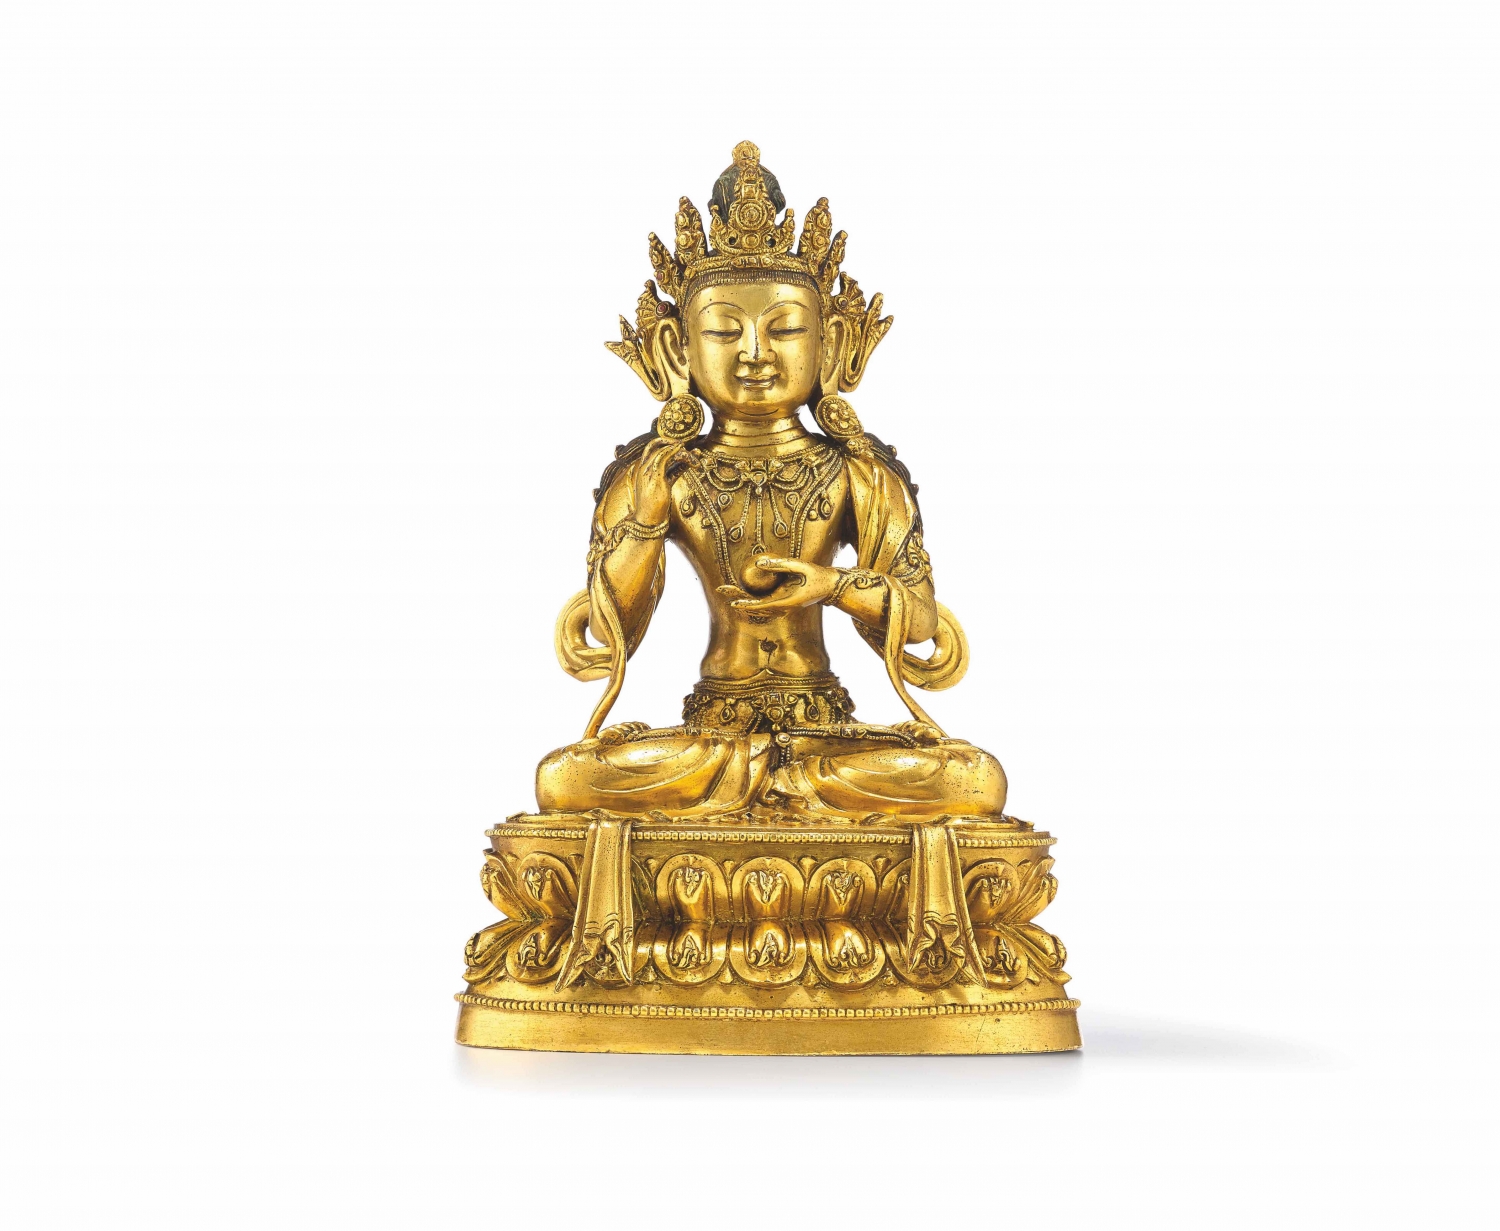 A gilt copper alloy seated figure of Avalokitesvara/Guanyin